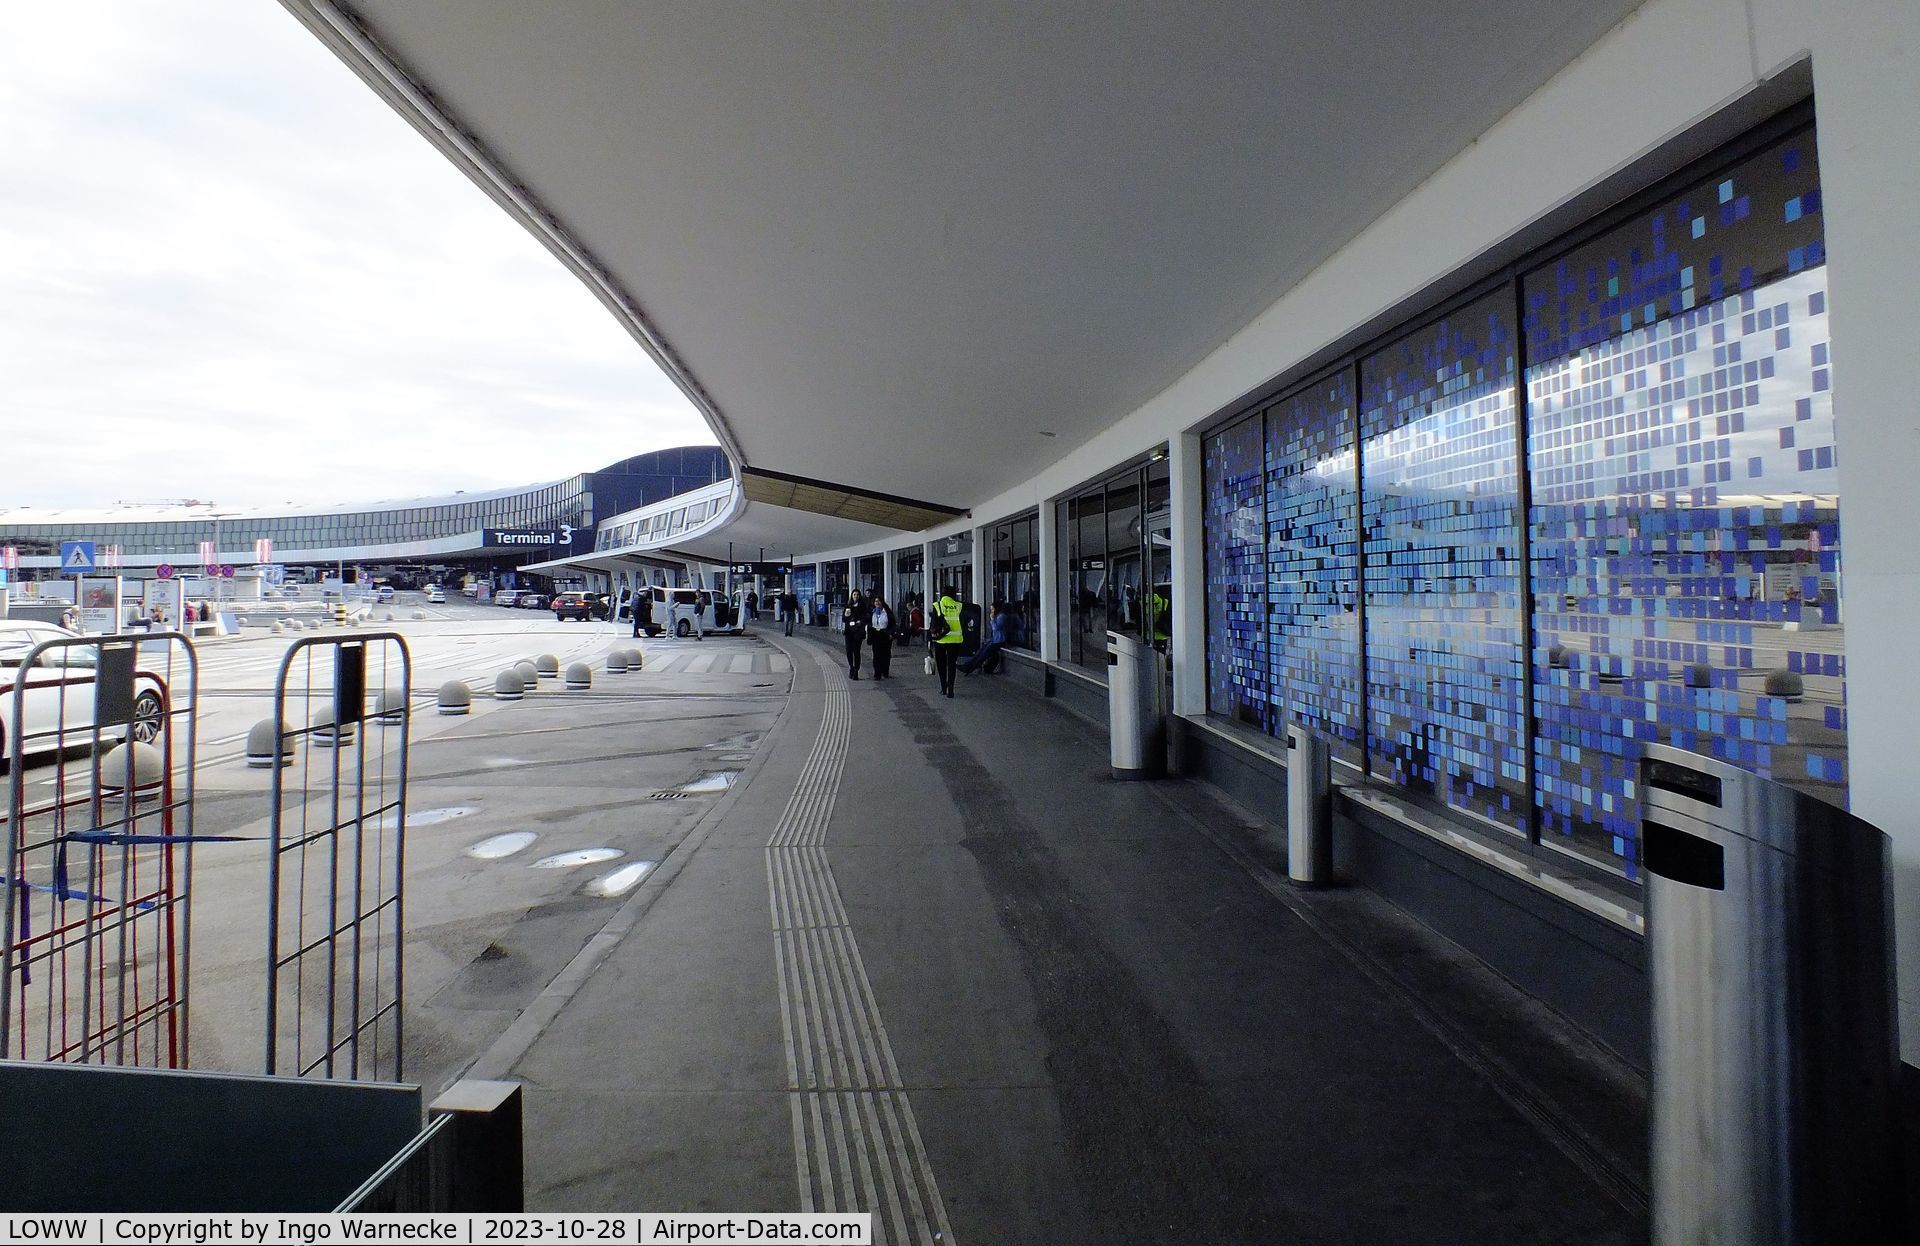 Vienna International Airport, Vienna Austria (LOWW) - streetside facade of terminal 1 at Wien airport